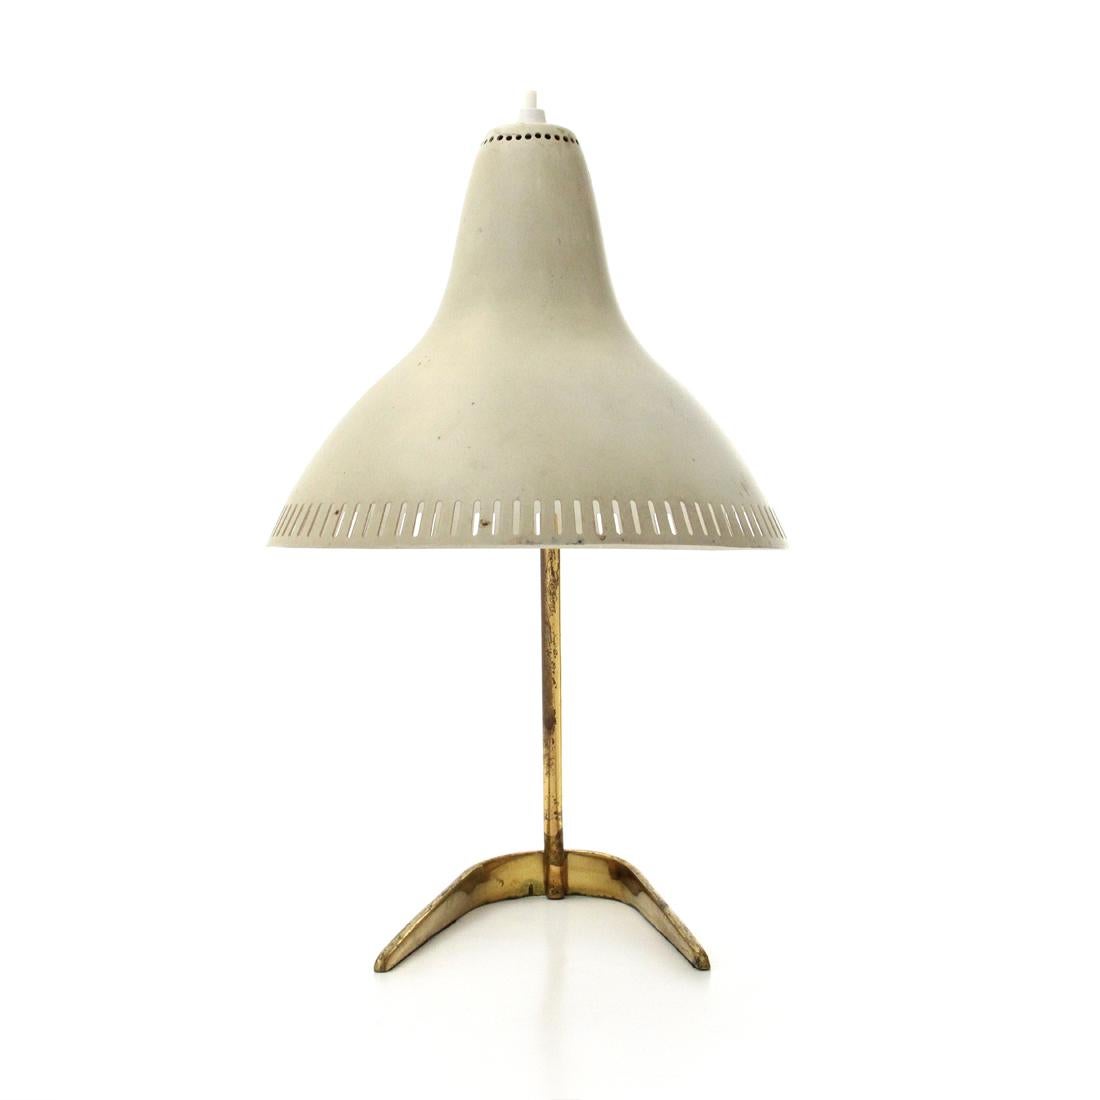 Italian Midcentury Table Lamp in Brass and Aluminium, 1950s